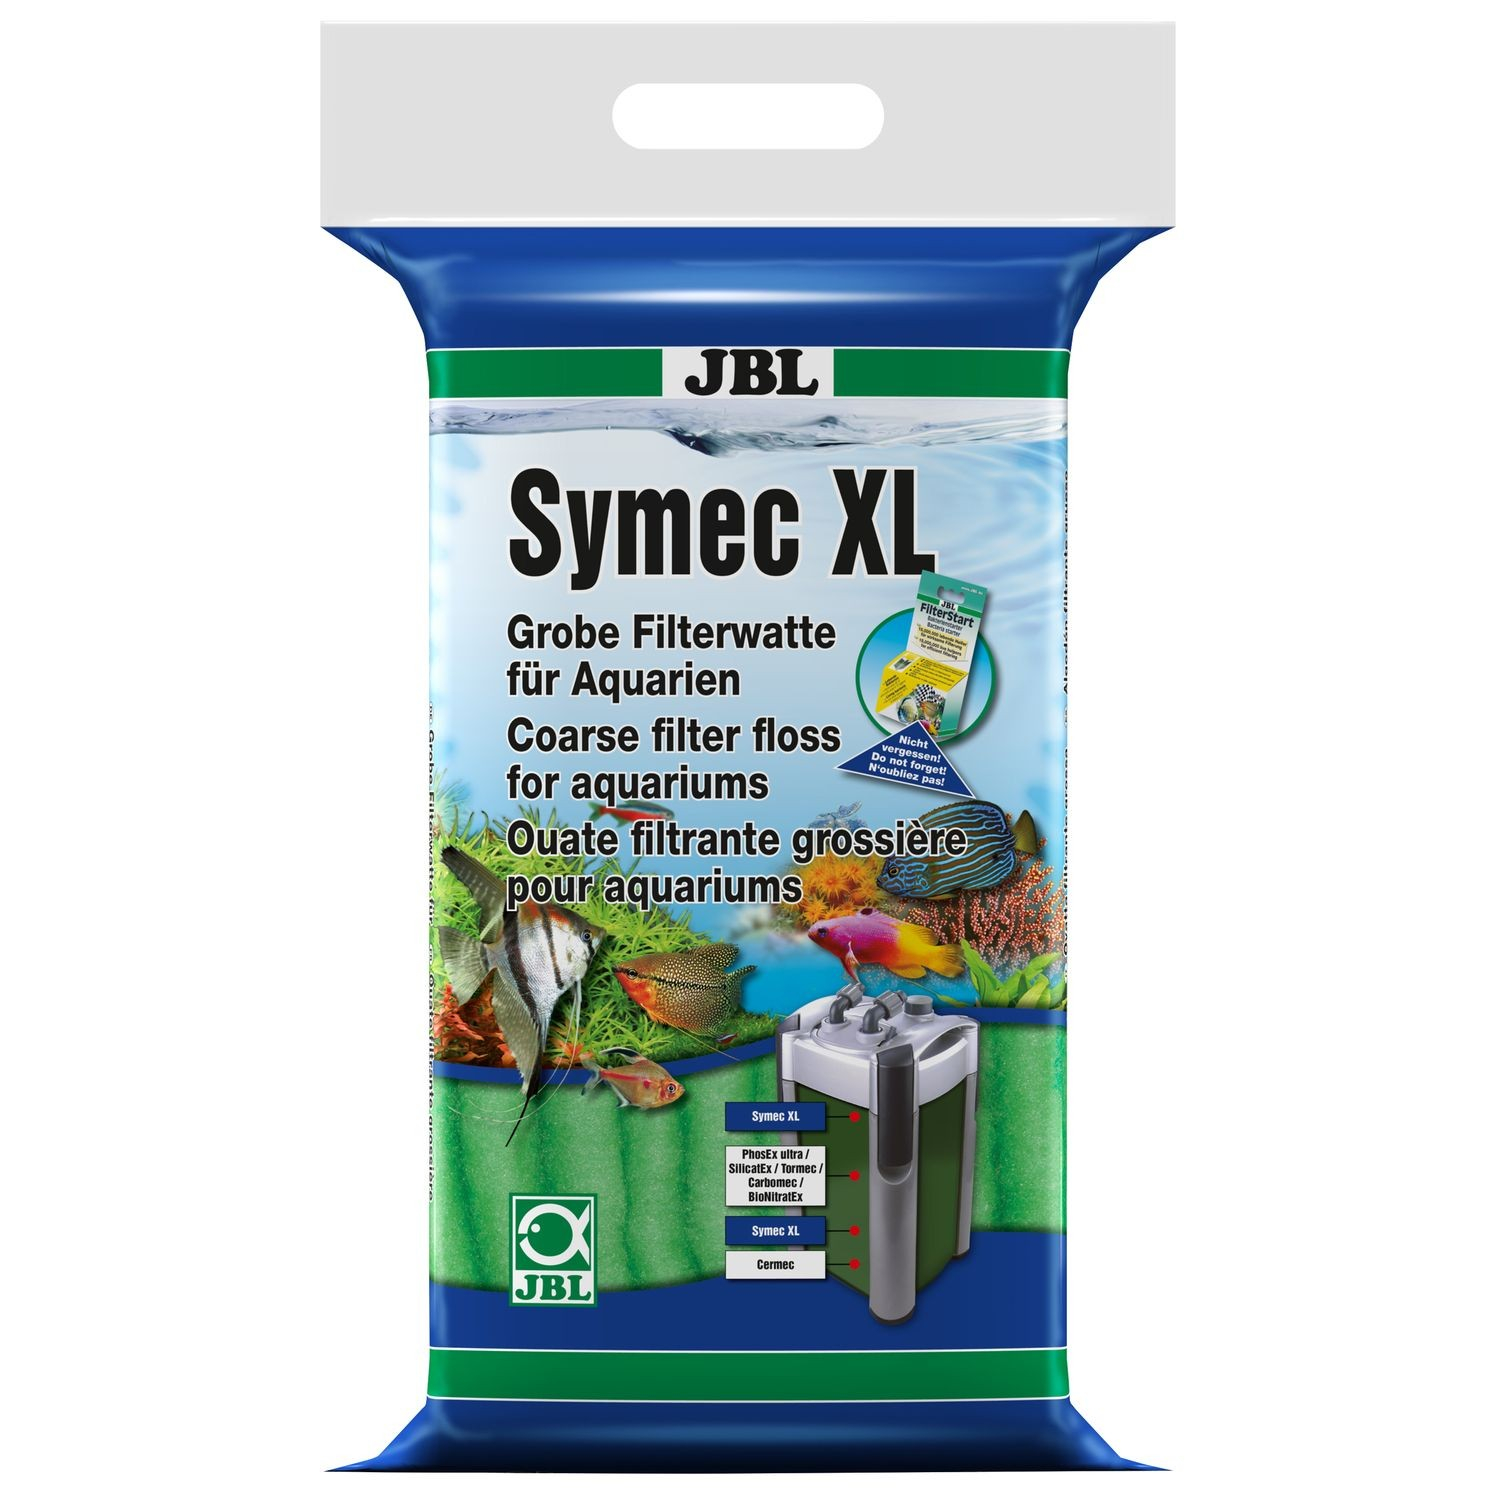 JBL Symec XL groffe filterwatten